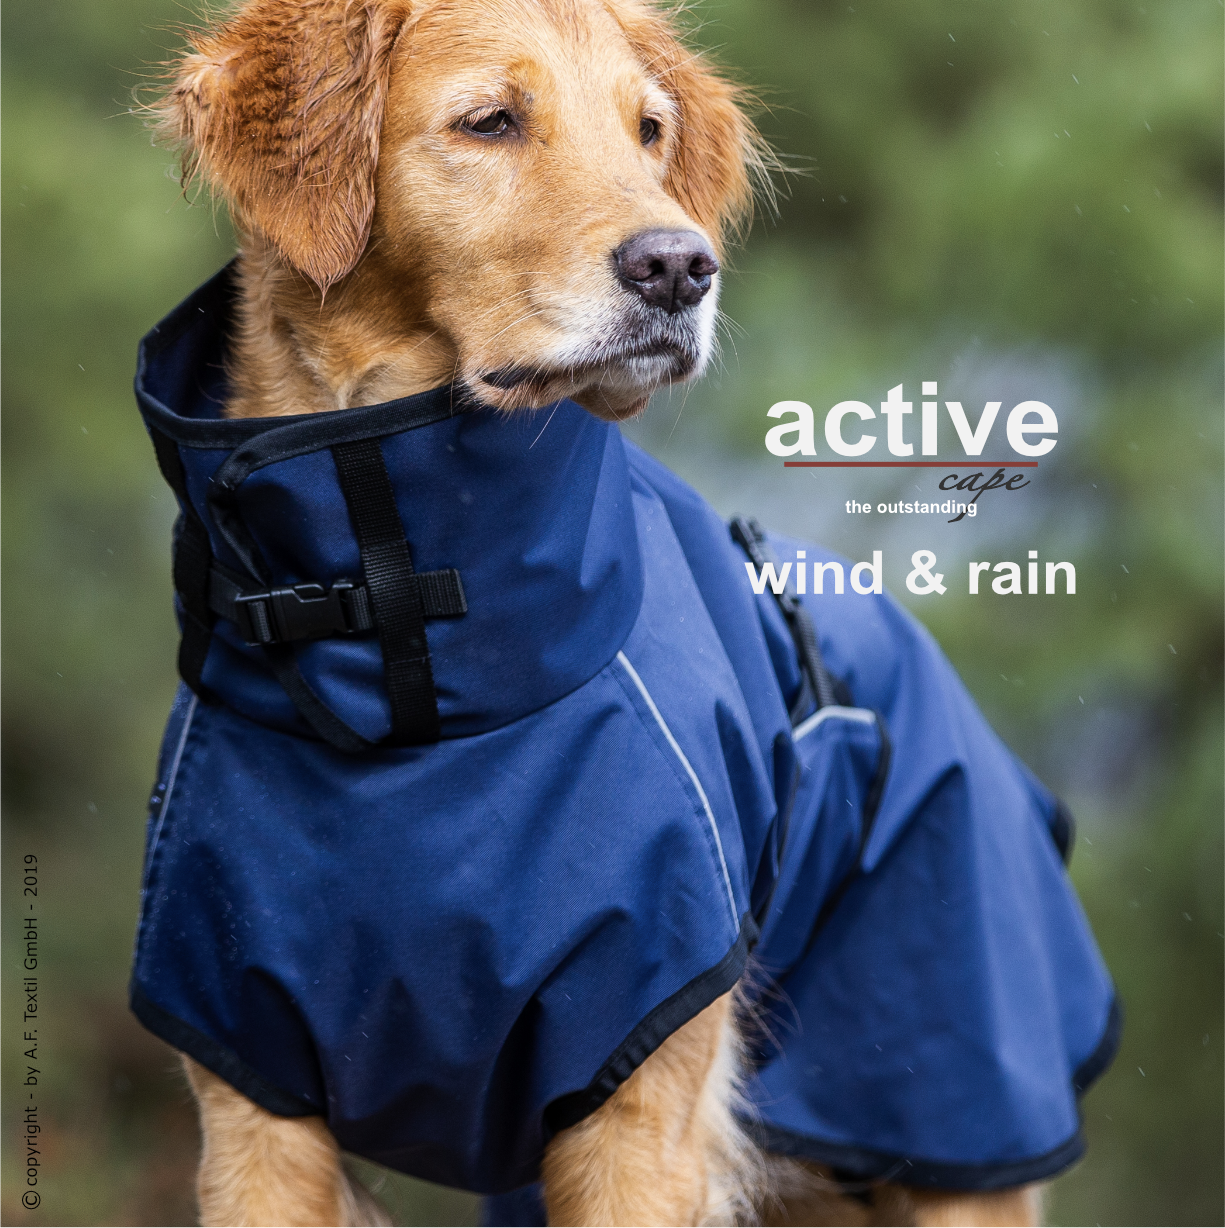 active cape wind&rain dark blue